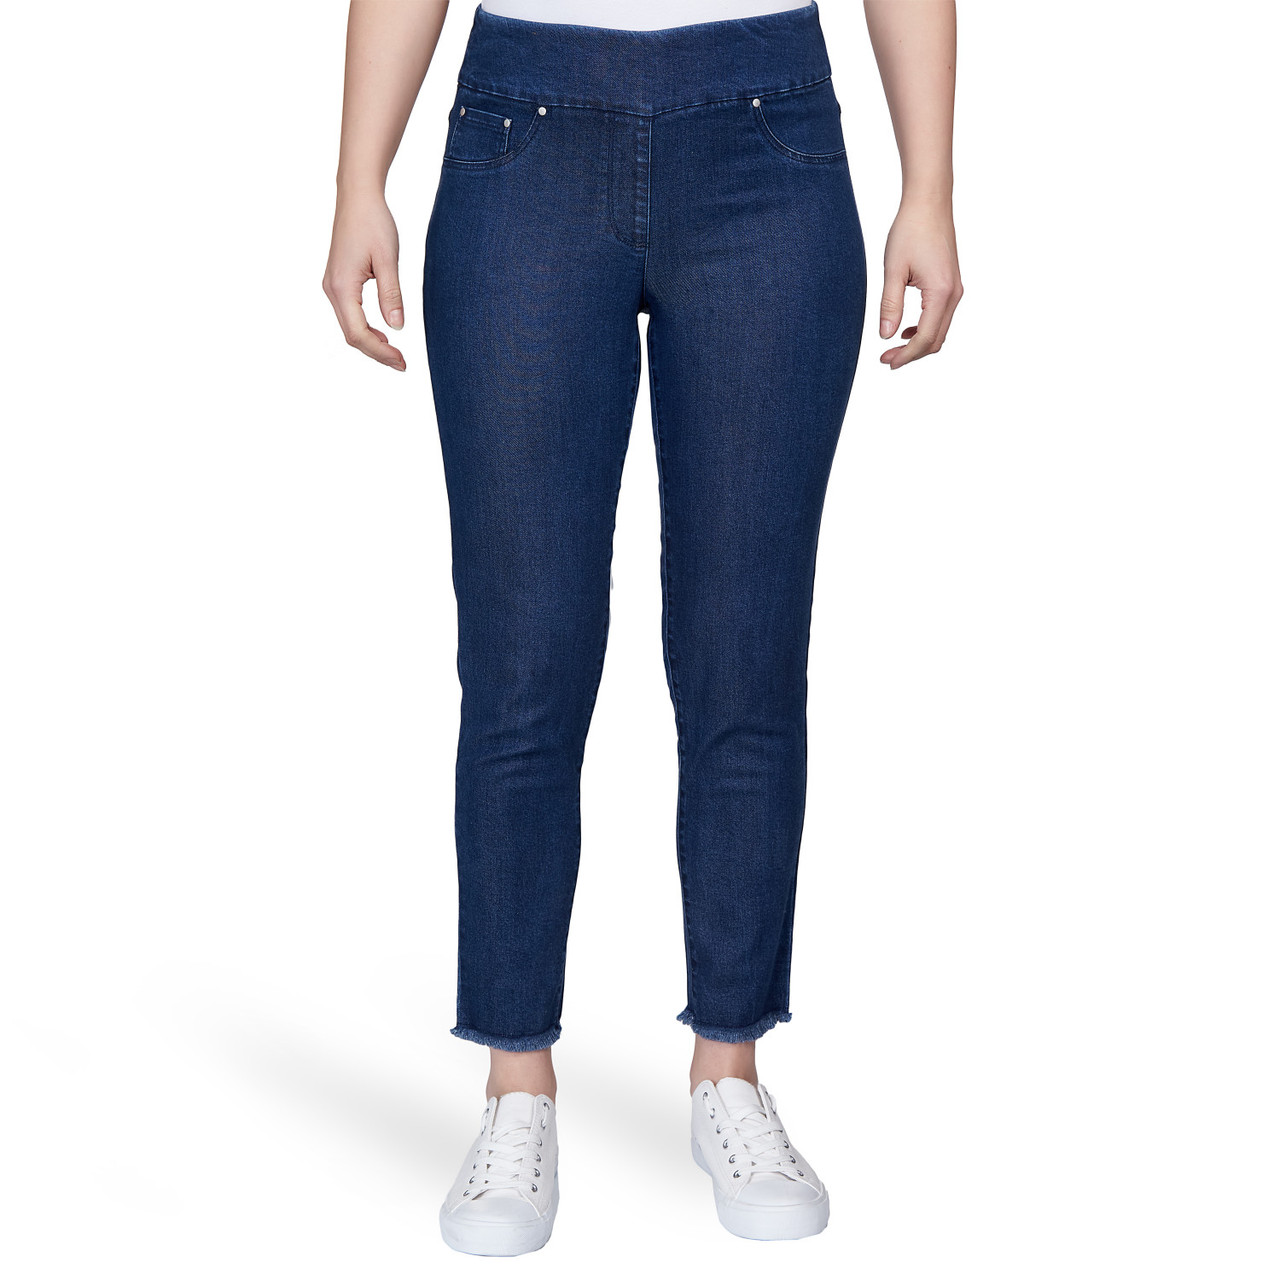 Women's Super Soft Denim-Like Twill Jeans